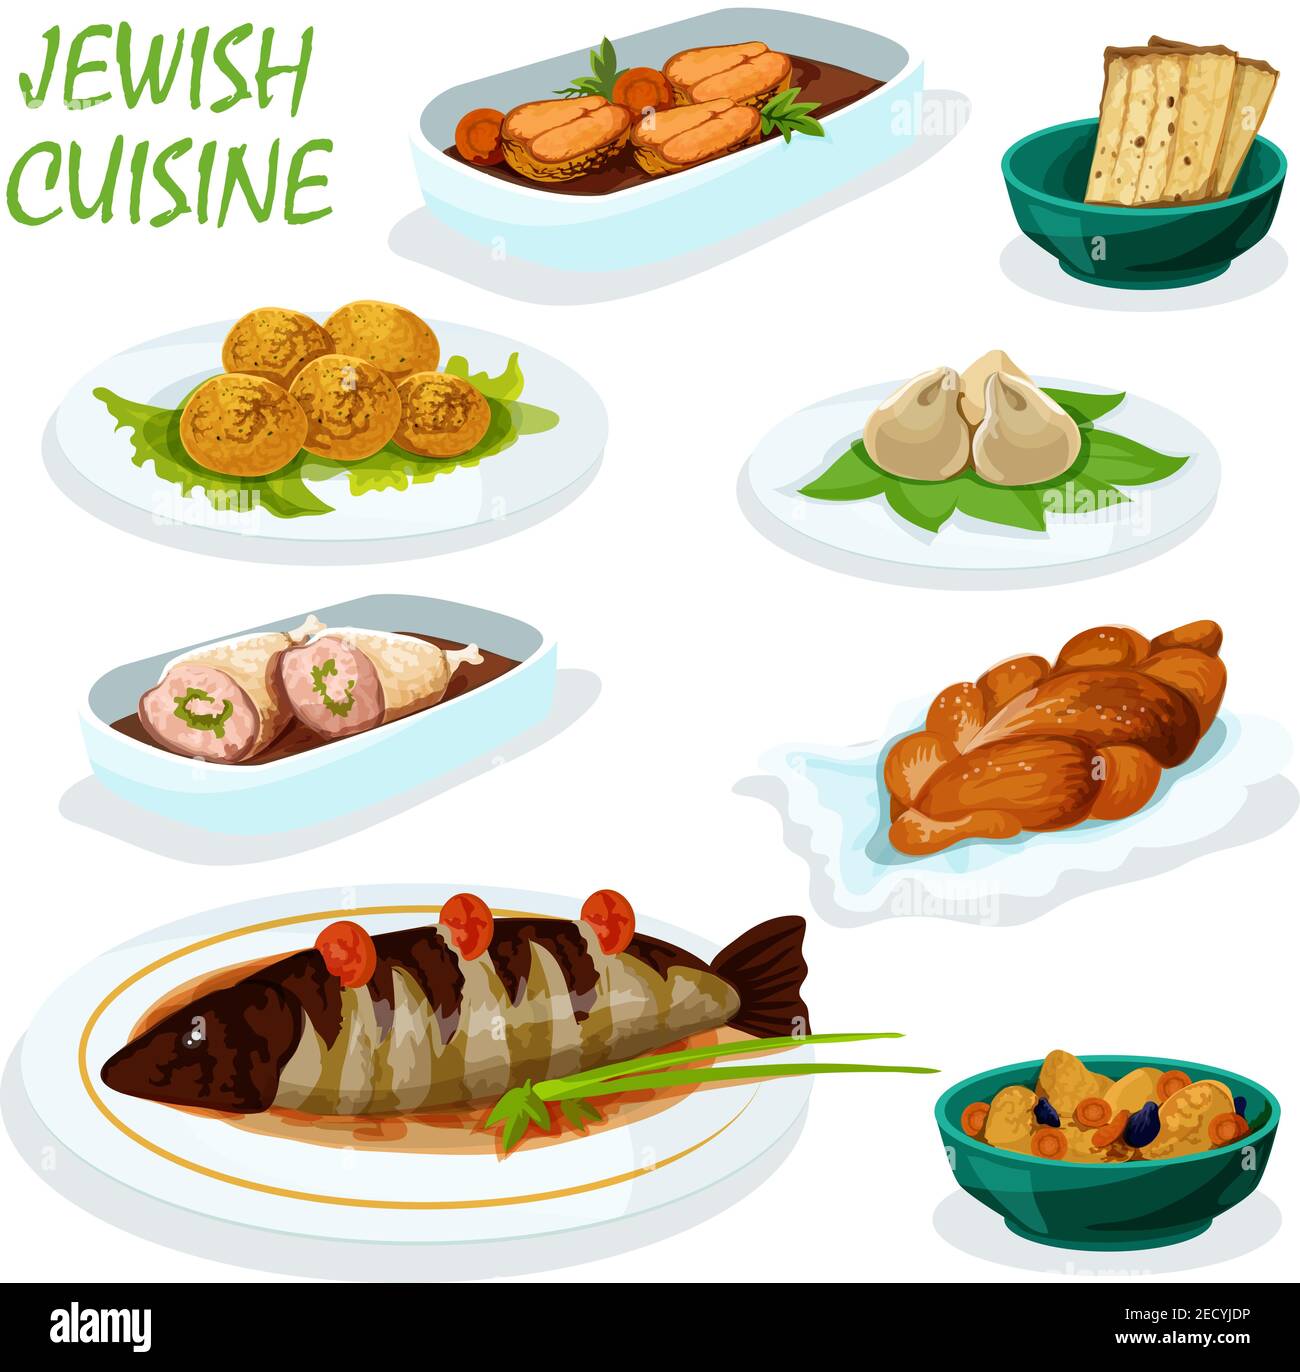 Jewish cuisine festive dinner menu icon with matzah, chickpea falafel, gefilte pike fish, stuffed chicken, sweet bread challah, meat dumpling and lamb Stock Vector